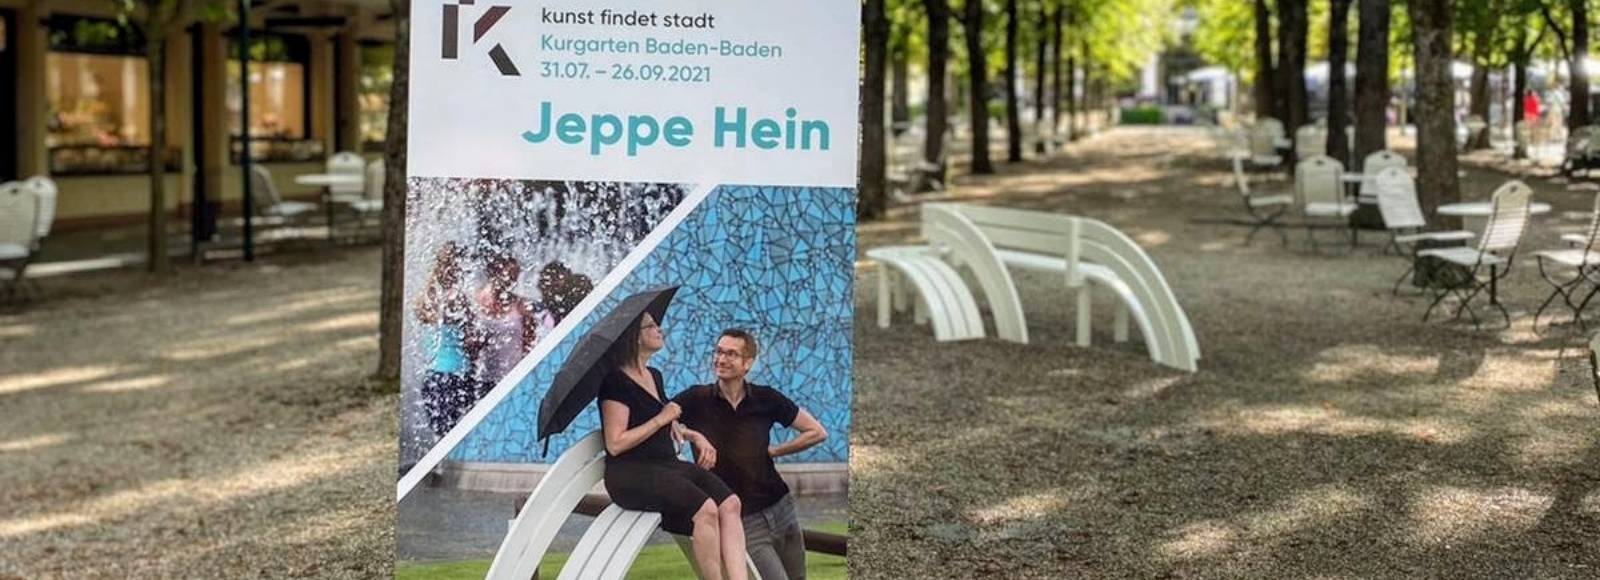 Kurgarten Kunst Jeppe Hein